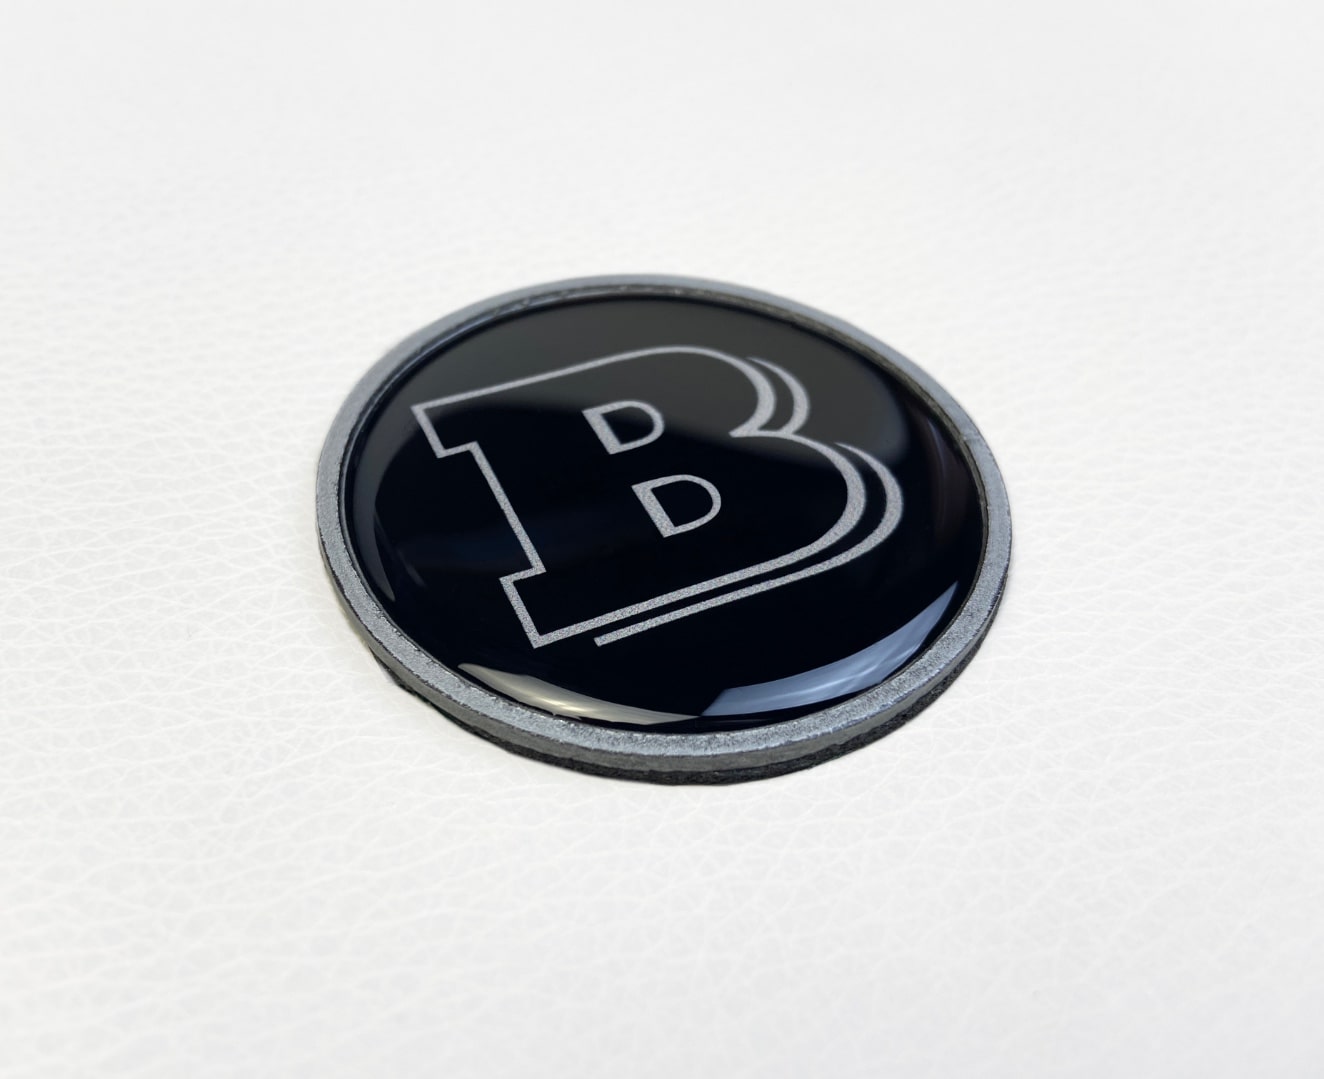 Mercedes Brabus Trunk Emblem Badge Gold Grey Hex Edition